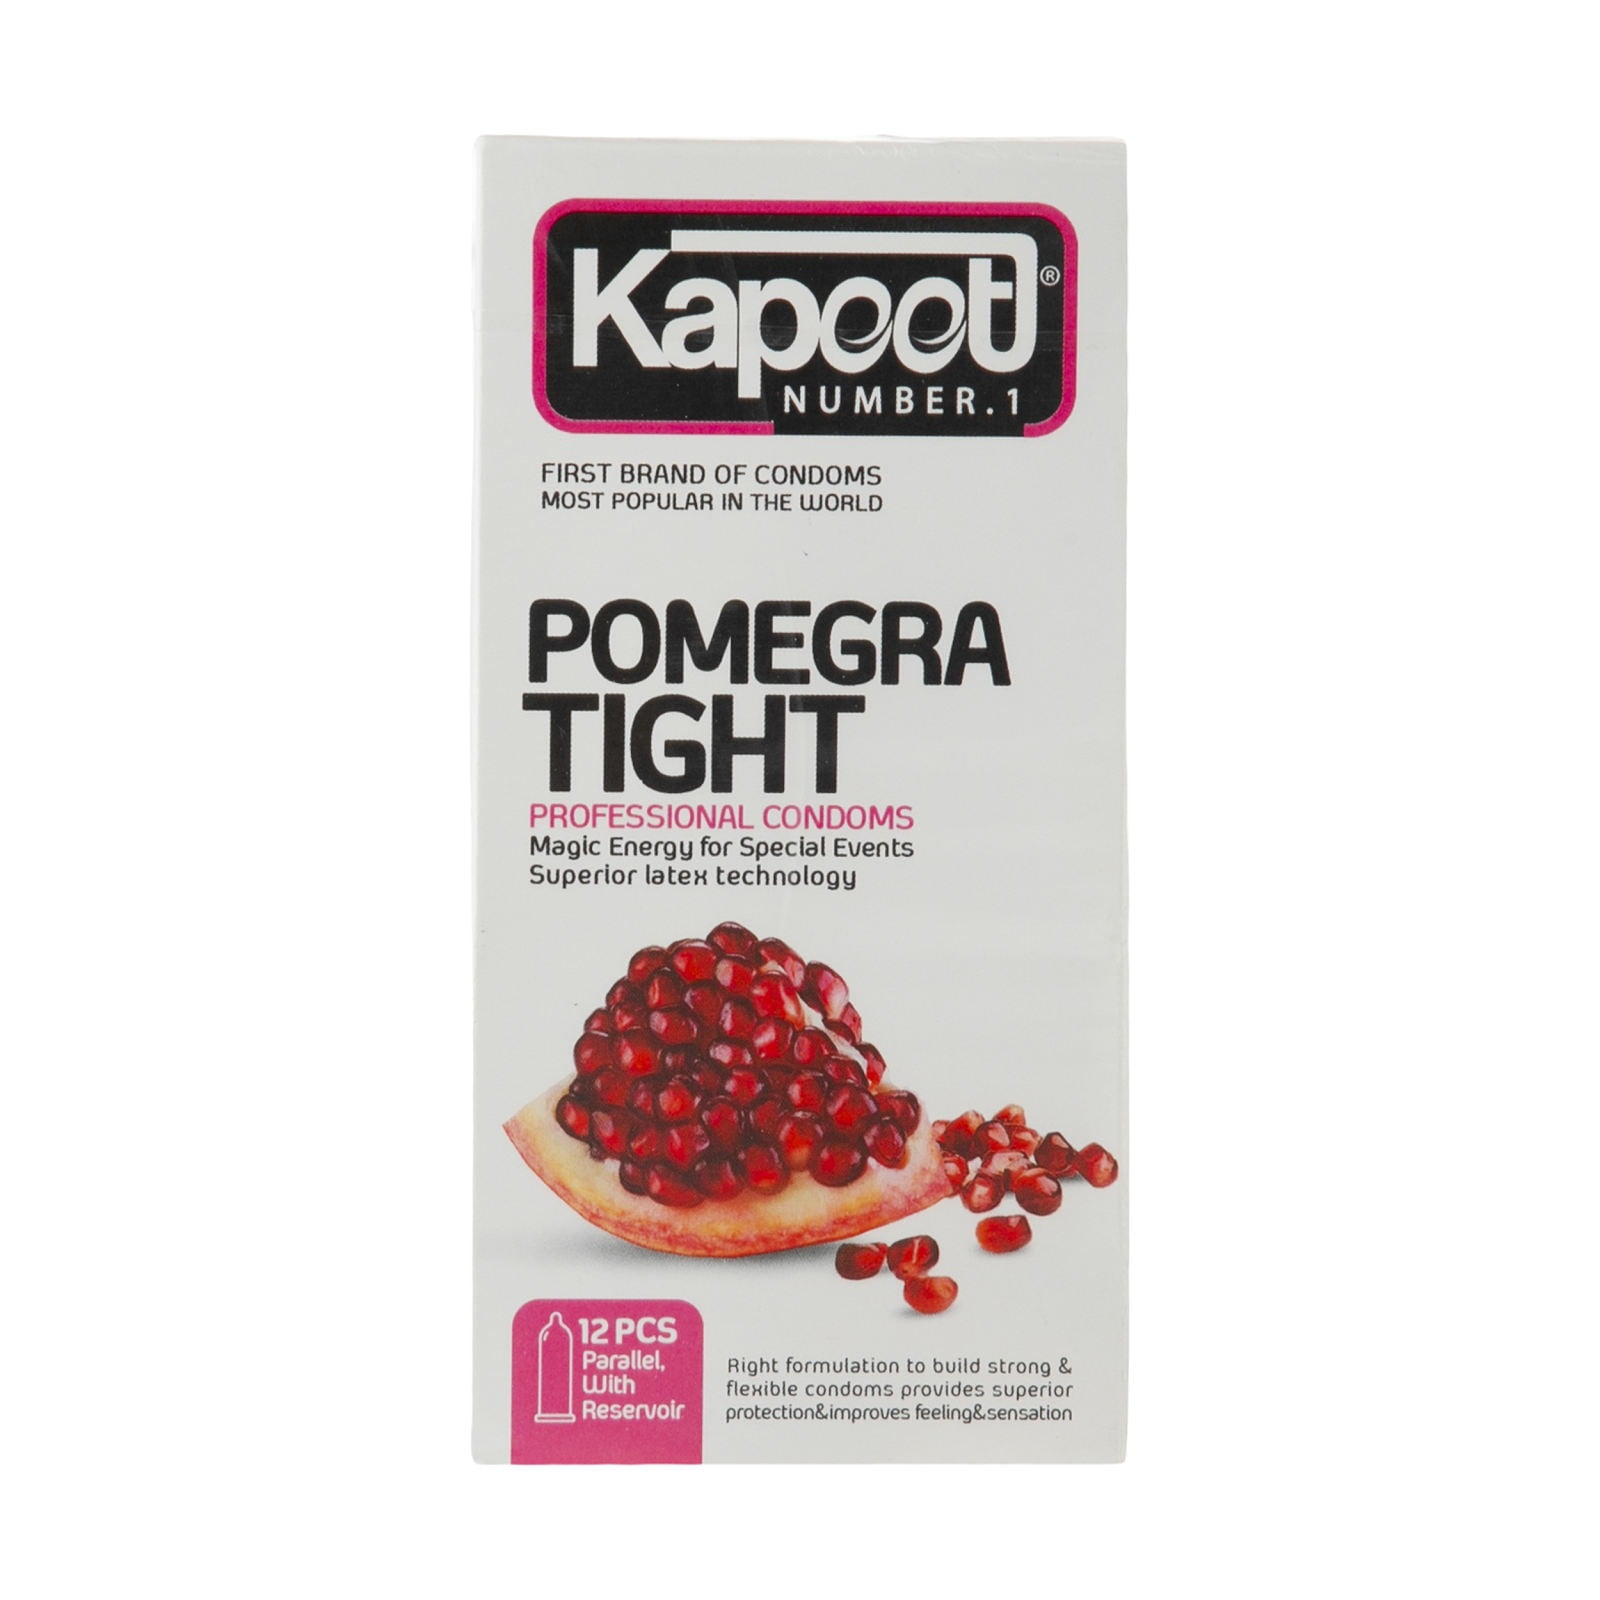 کاندوم کاپوت مدل Pomegra Tight تعداد ۱۲ عدد Kapoot Pomegra Tight Condoms 12 PSC